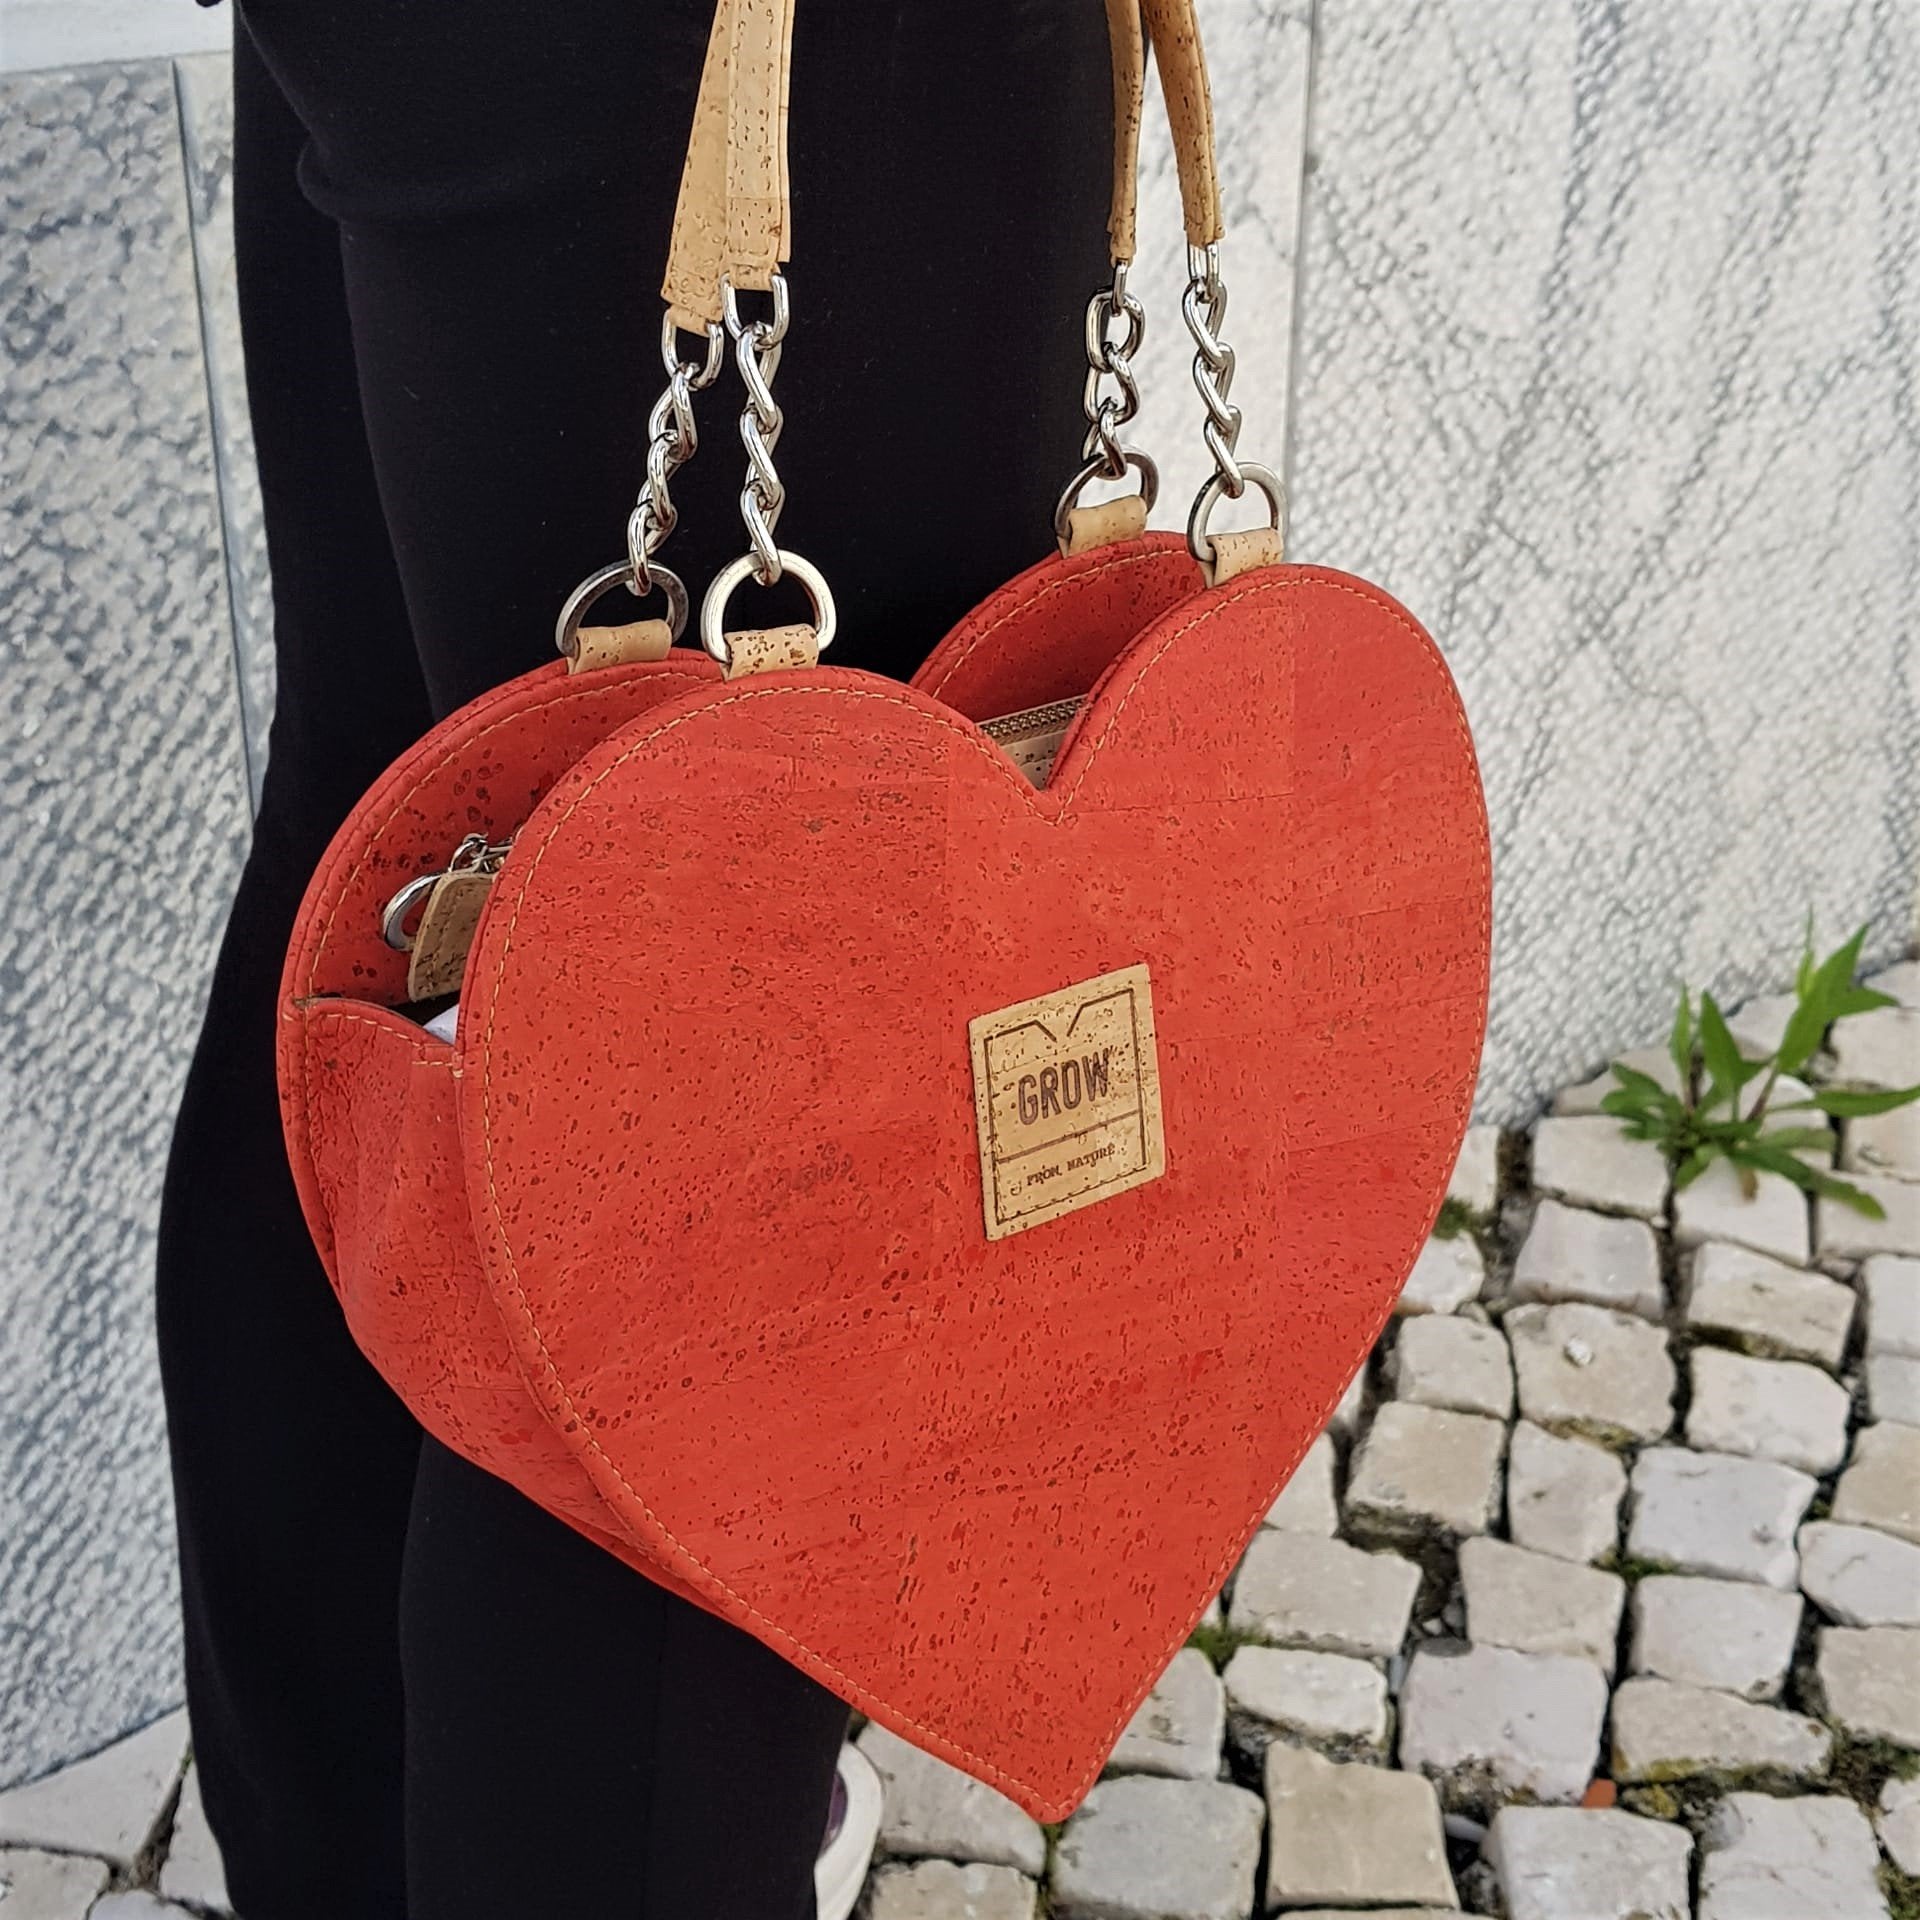 heart shaped bag